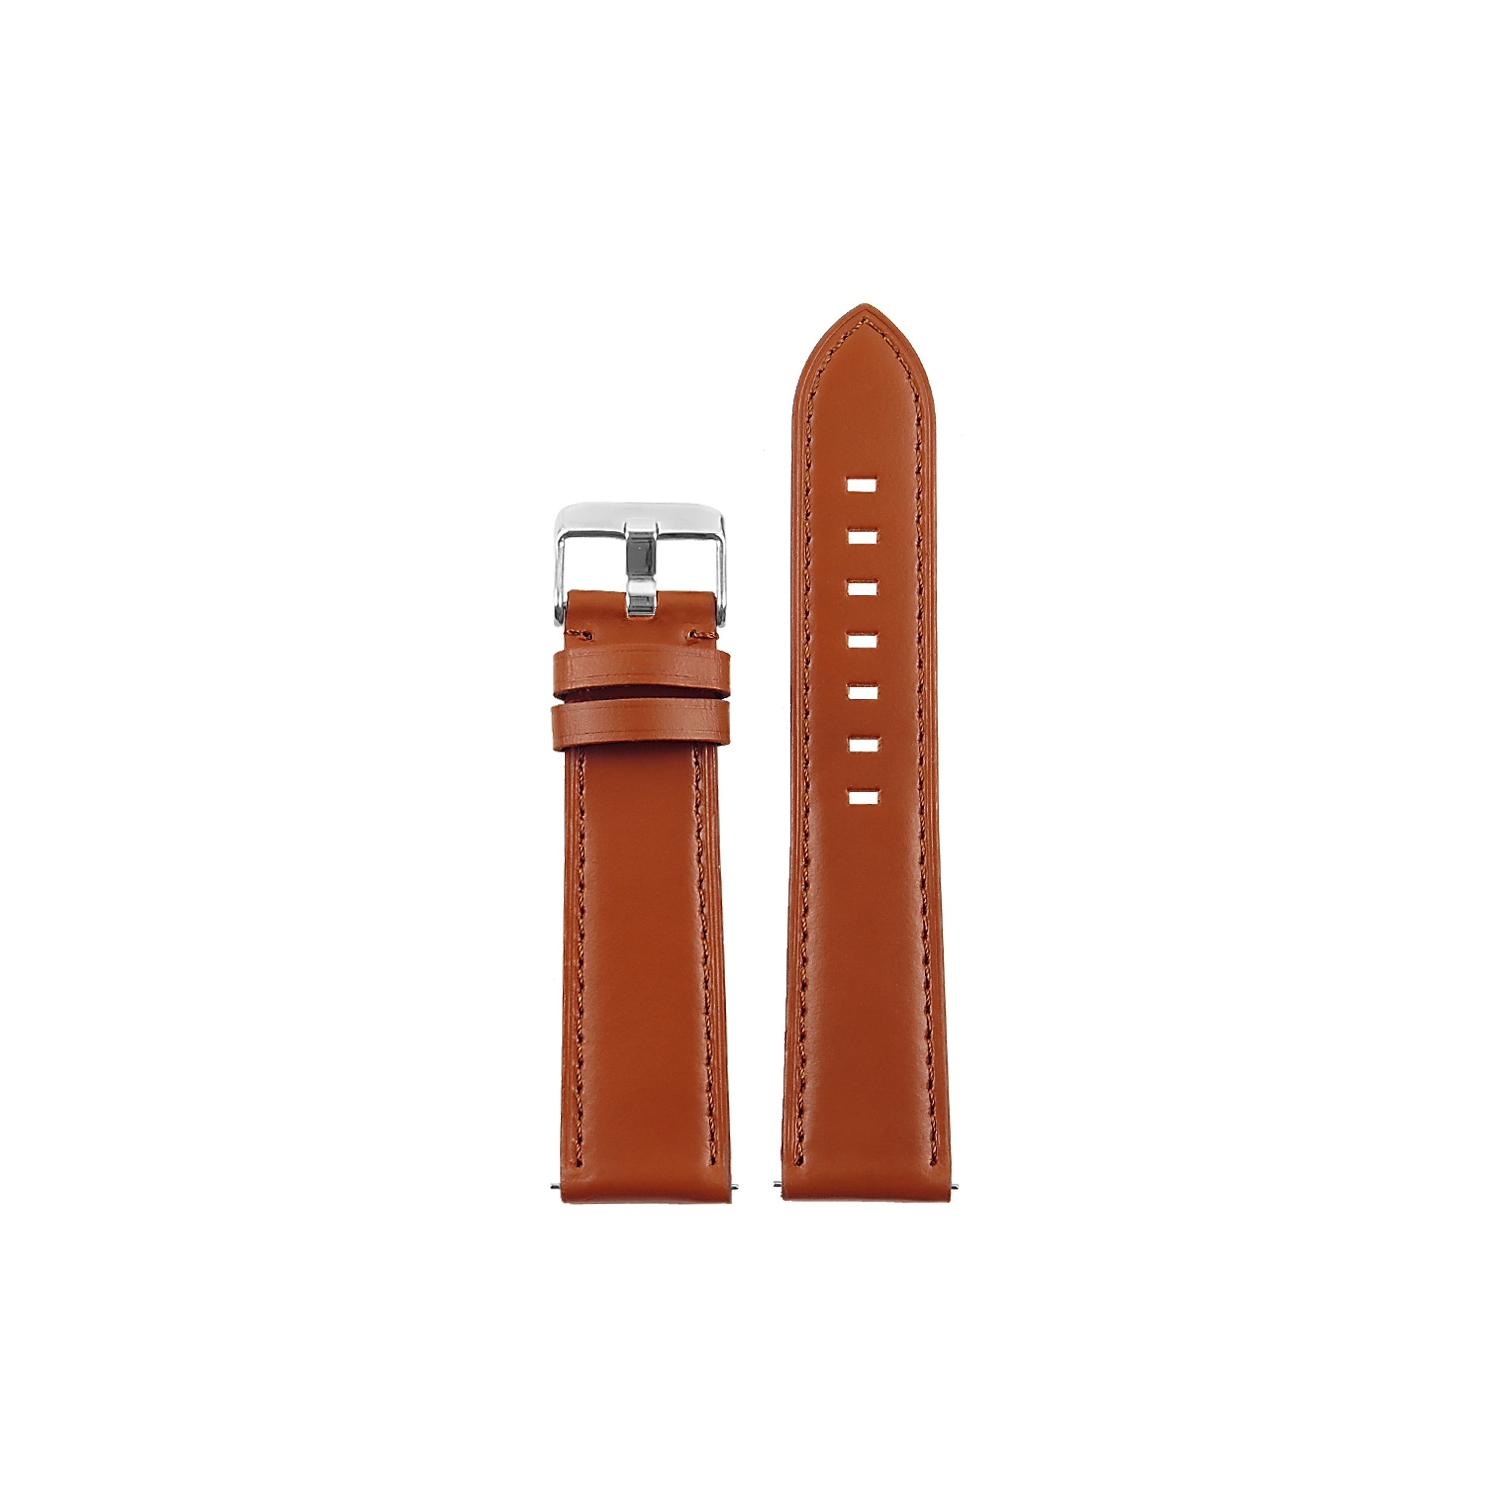 DASSARI Italian Leather 22mm Watch Band Strap for LG G Watch W100 - Brown